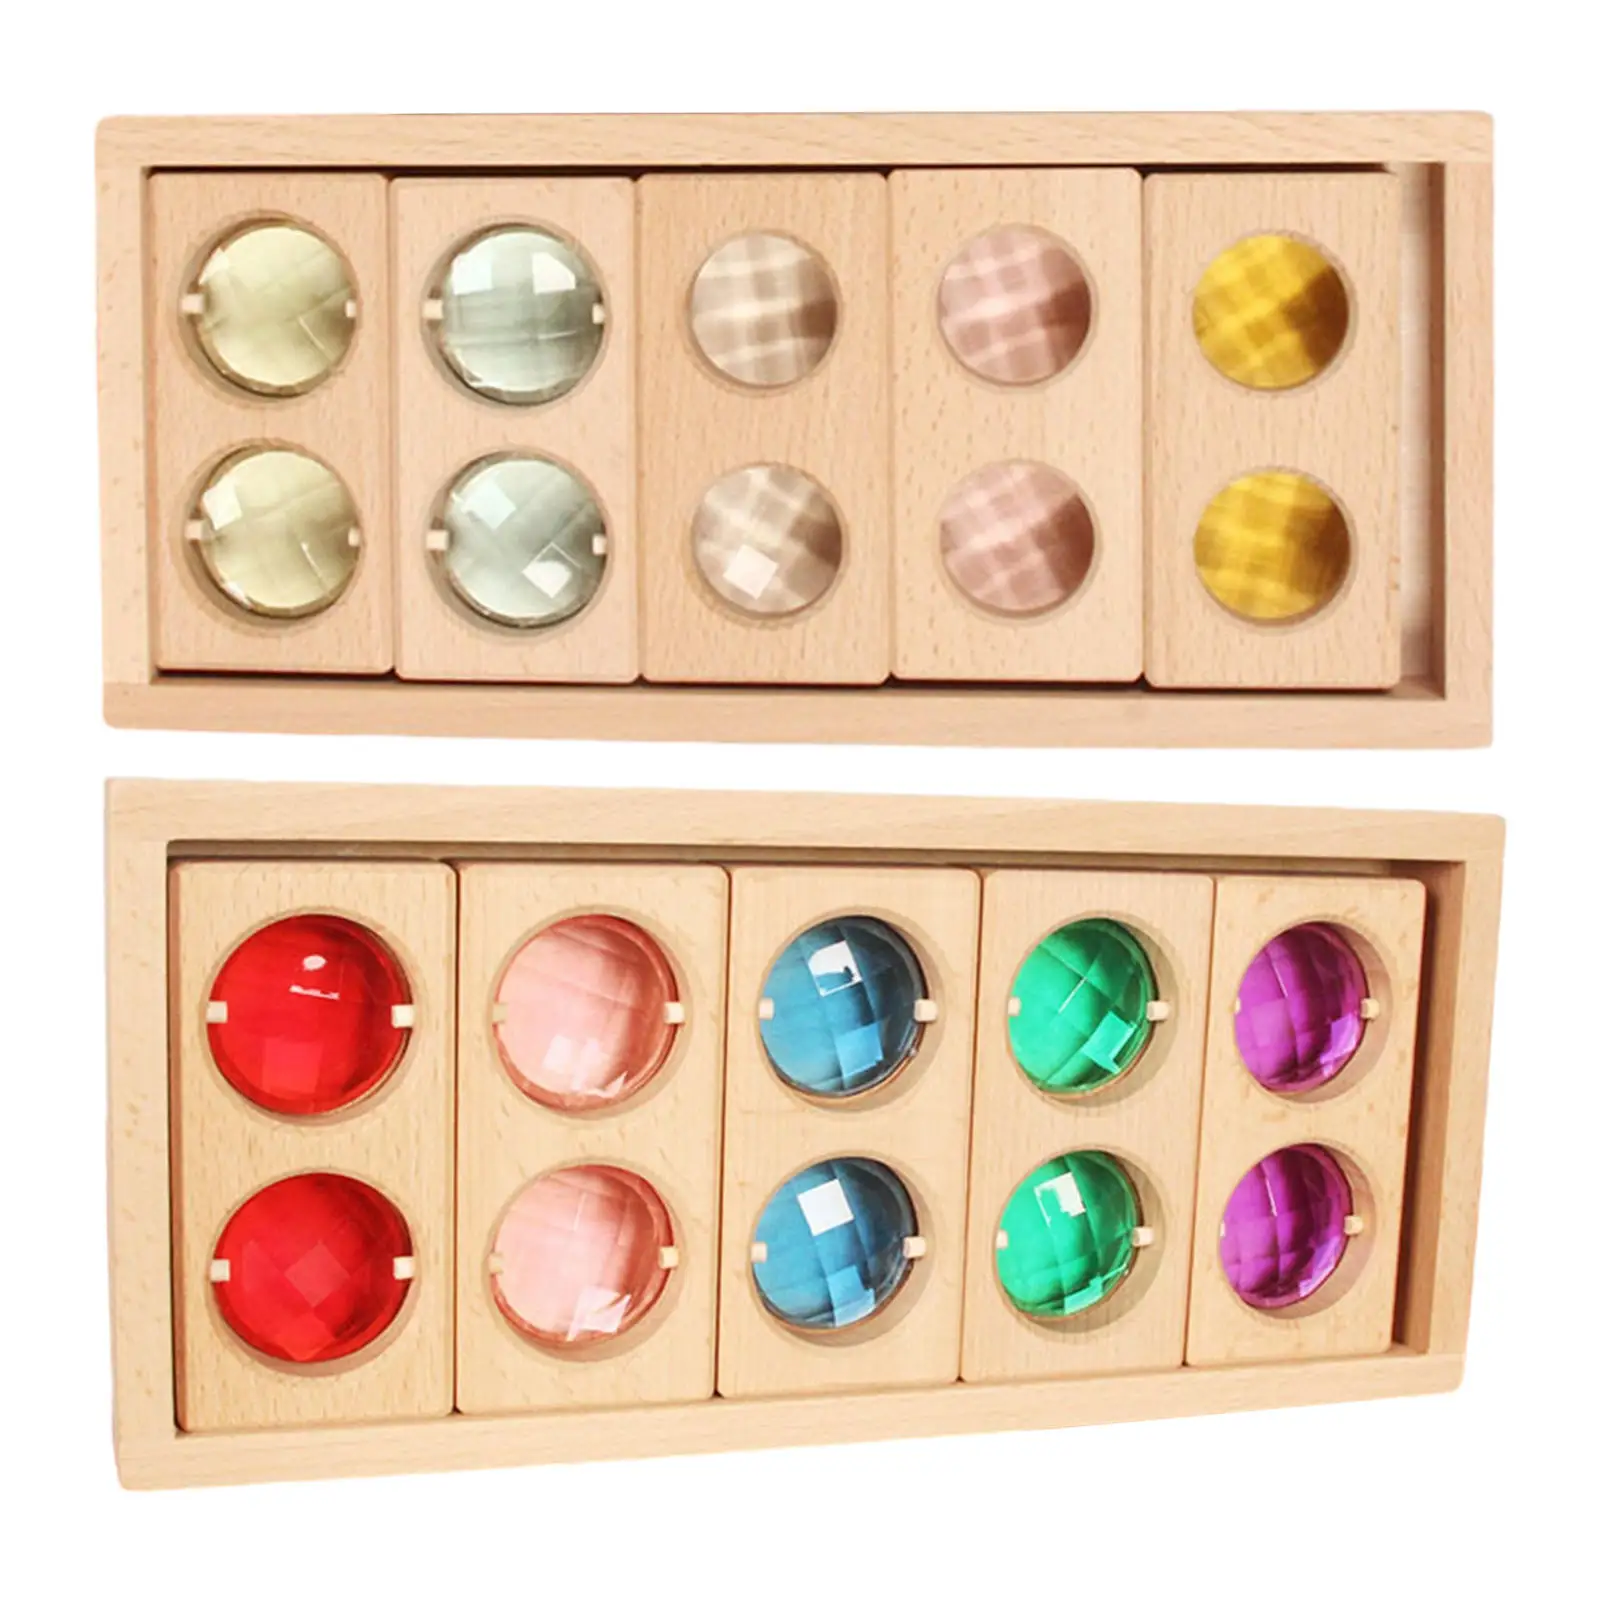 Wooden Toy Translucent Building Blocks Set Rainbow Gemstone Blocks for Preschool Toddlers